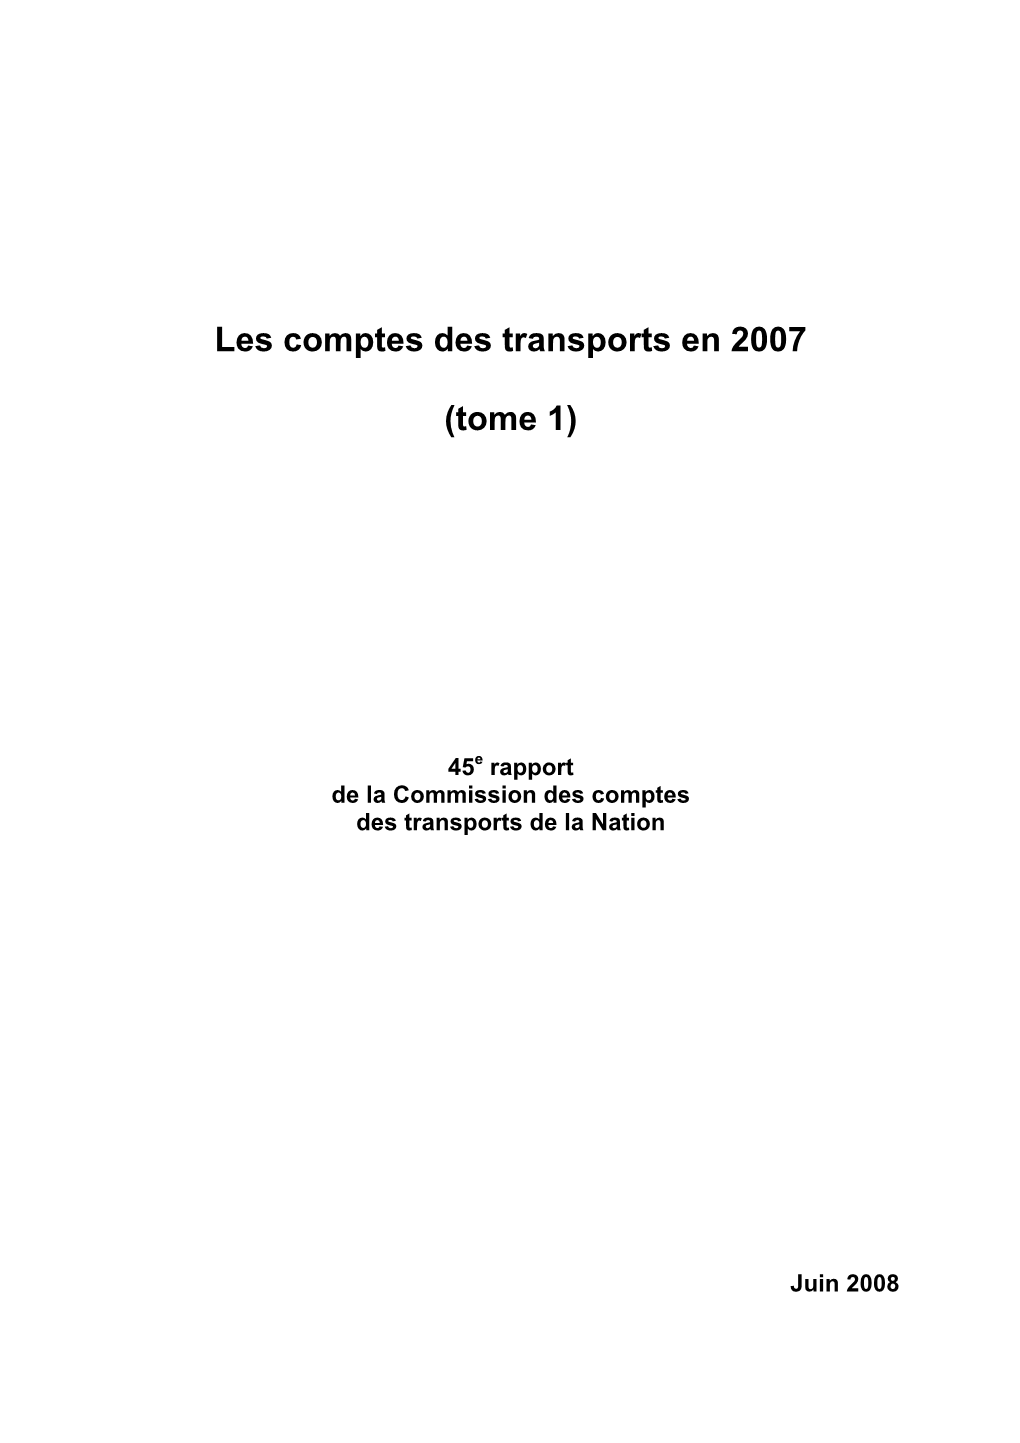 Les Comptes Des Transports En 2007 (Tome 1) – Juin 2008 3